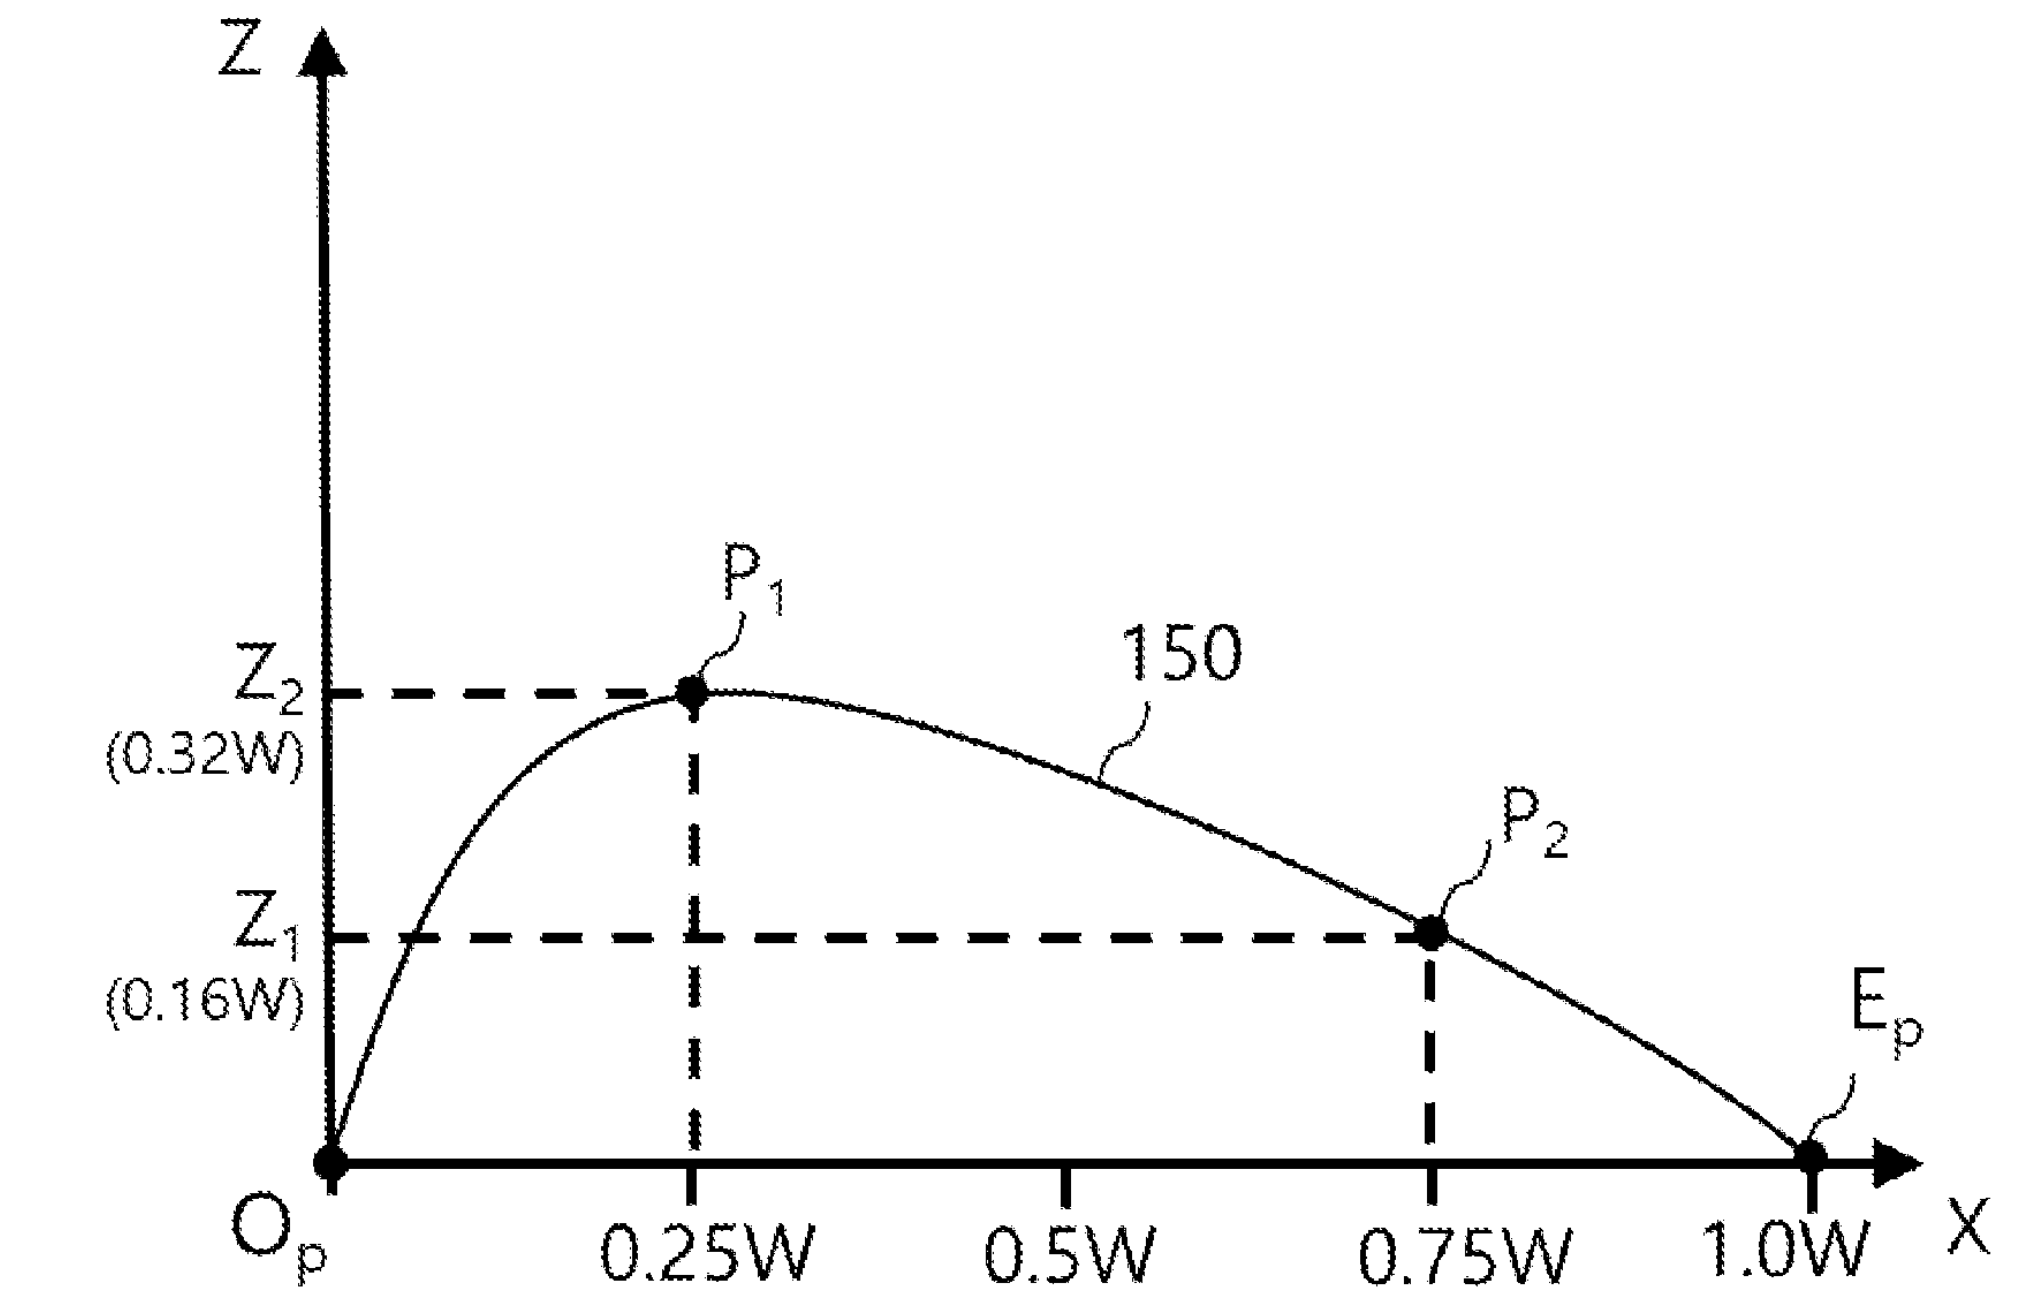 figure from Kim et al. patent